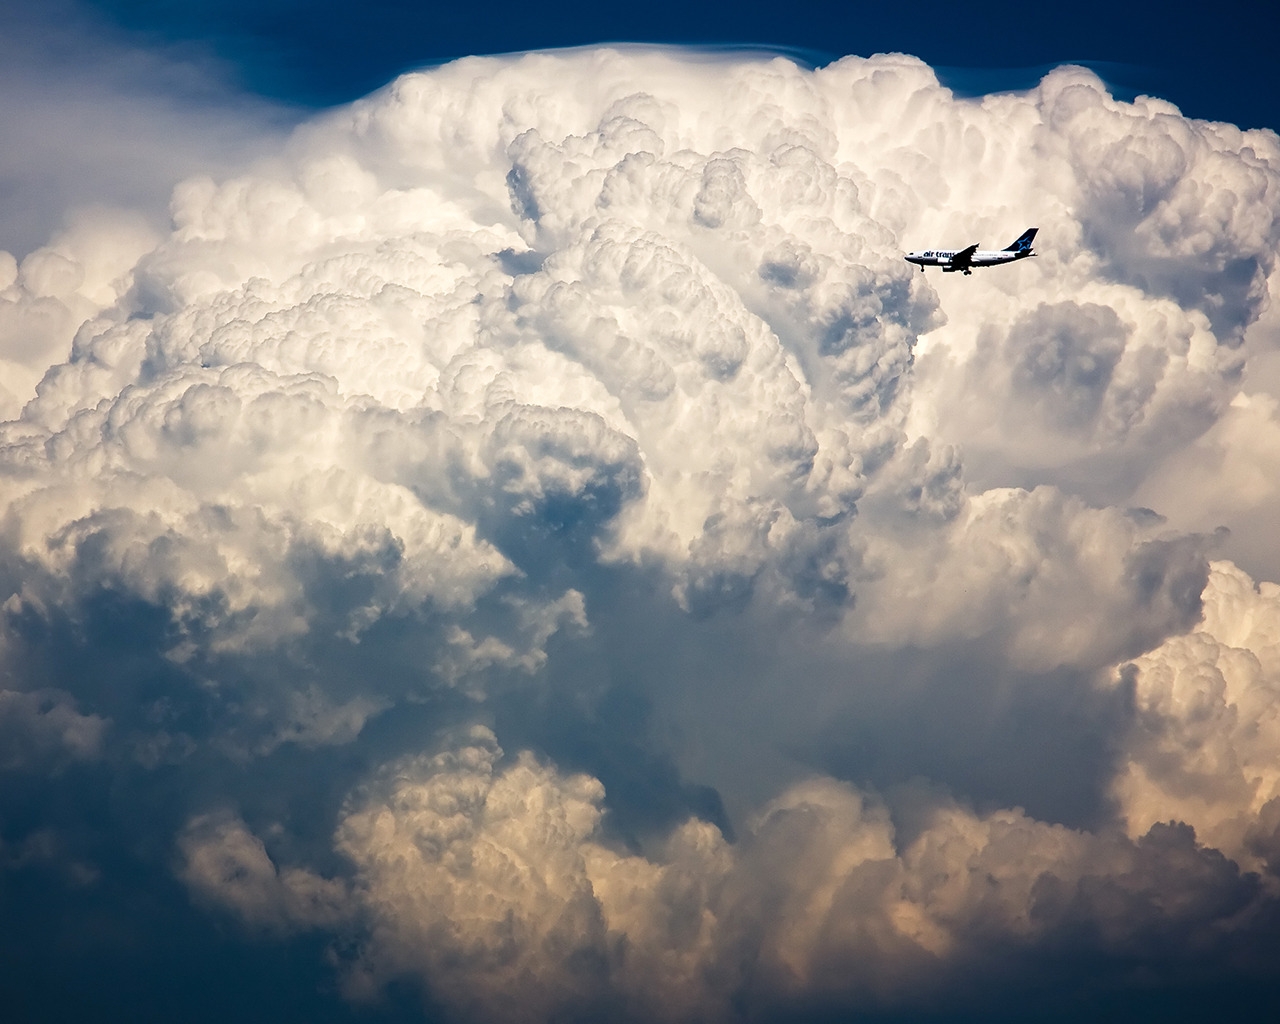 Air Transat vs Storm Cloud for 1280 x 1024 resolution